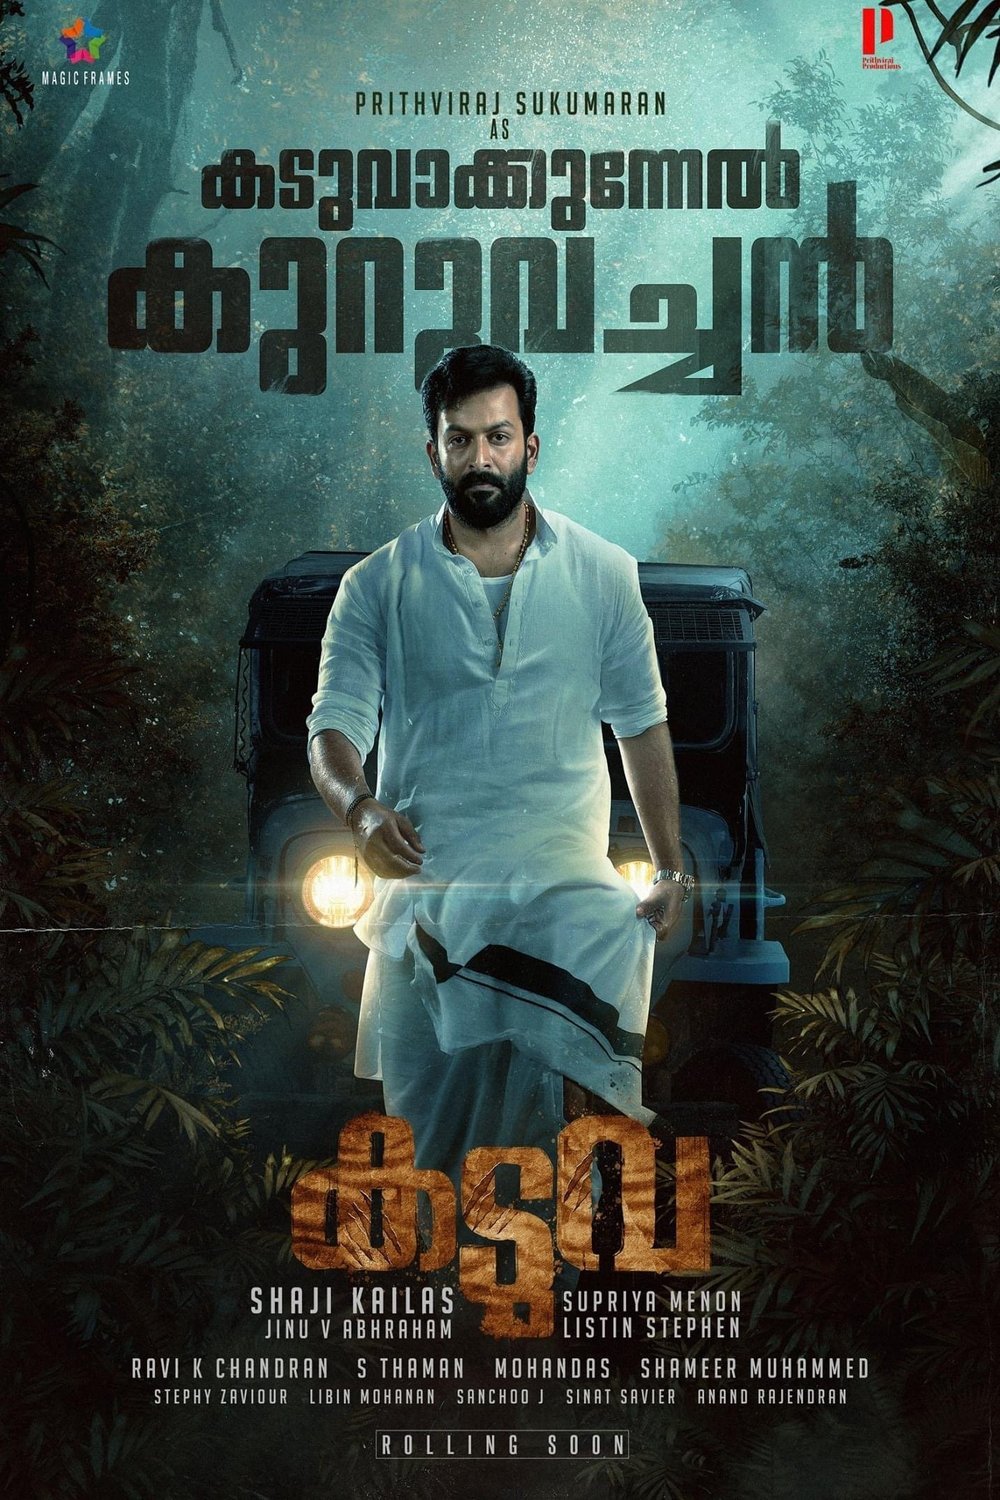 Malayalam poster of the movie Kaduva